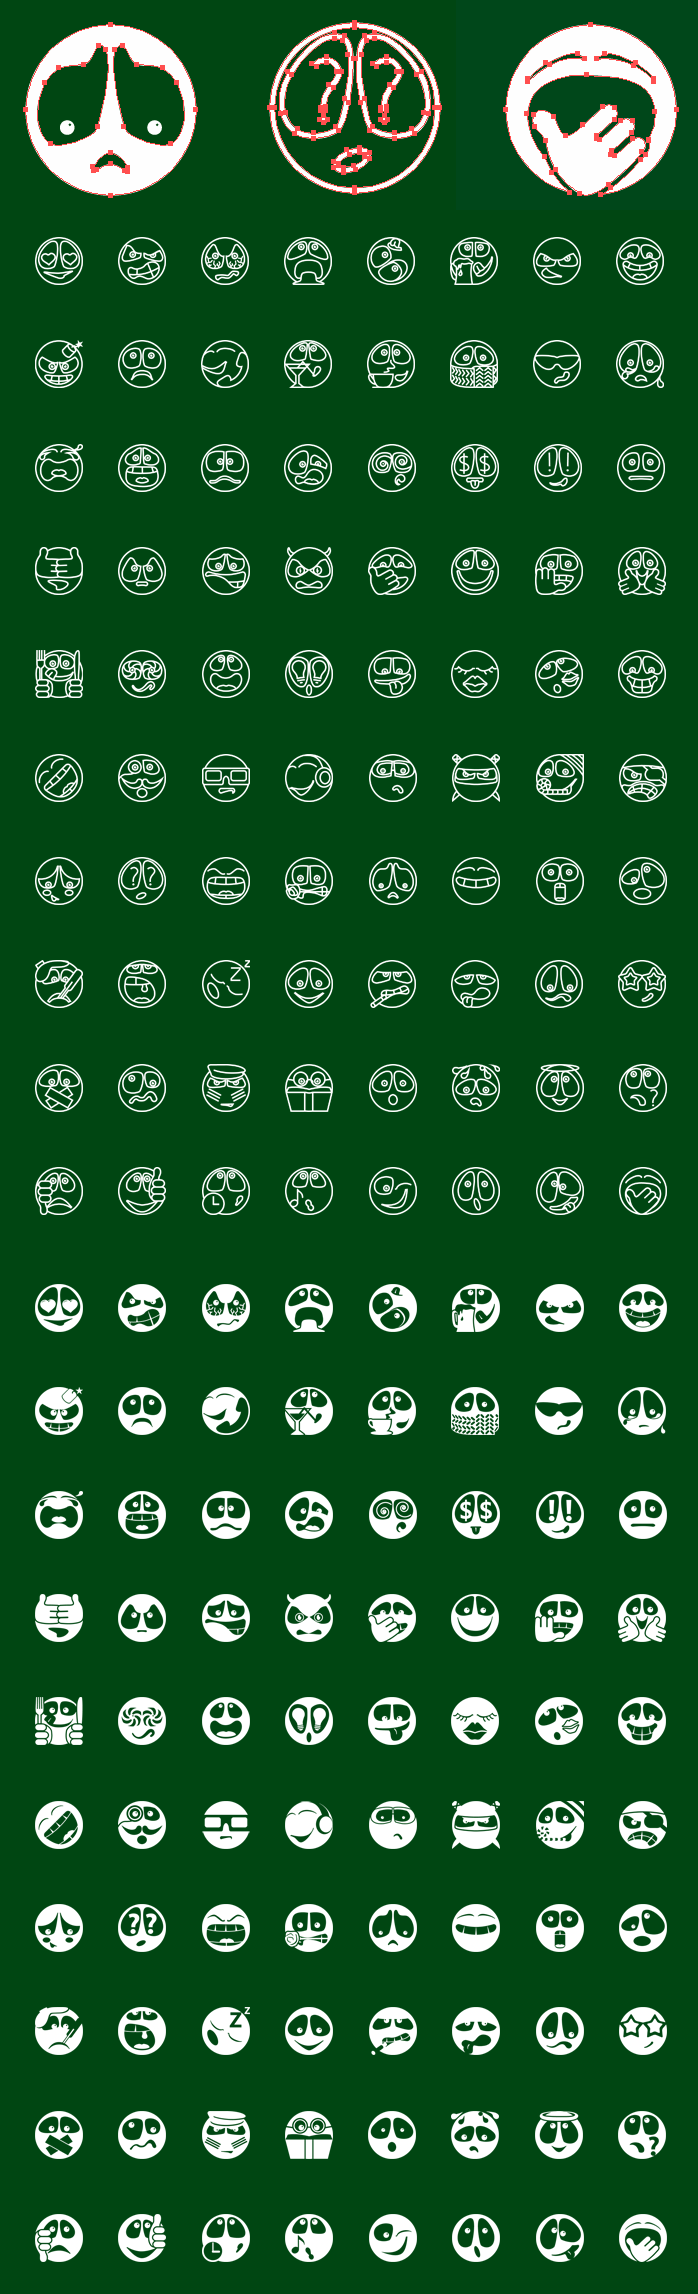 Metro Emoticons SVG Icons